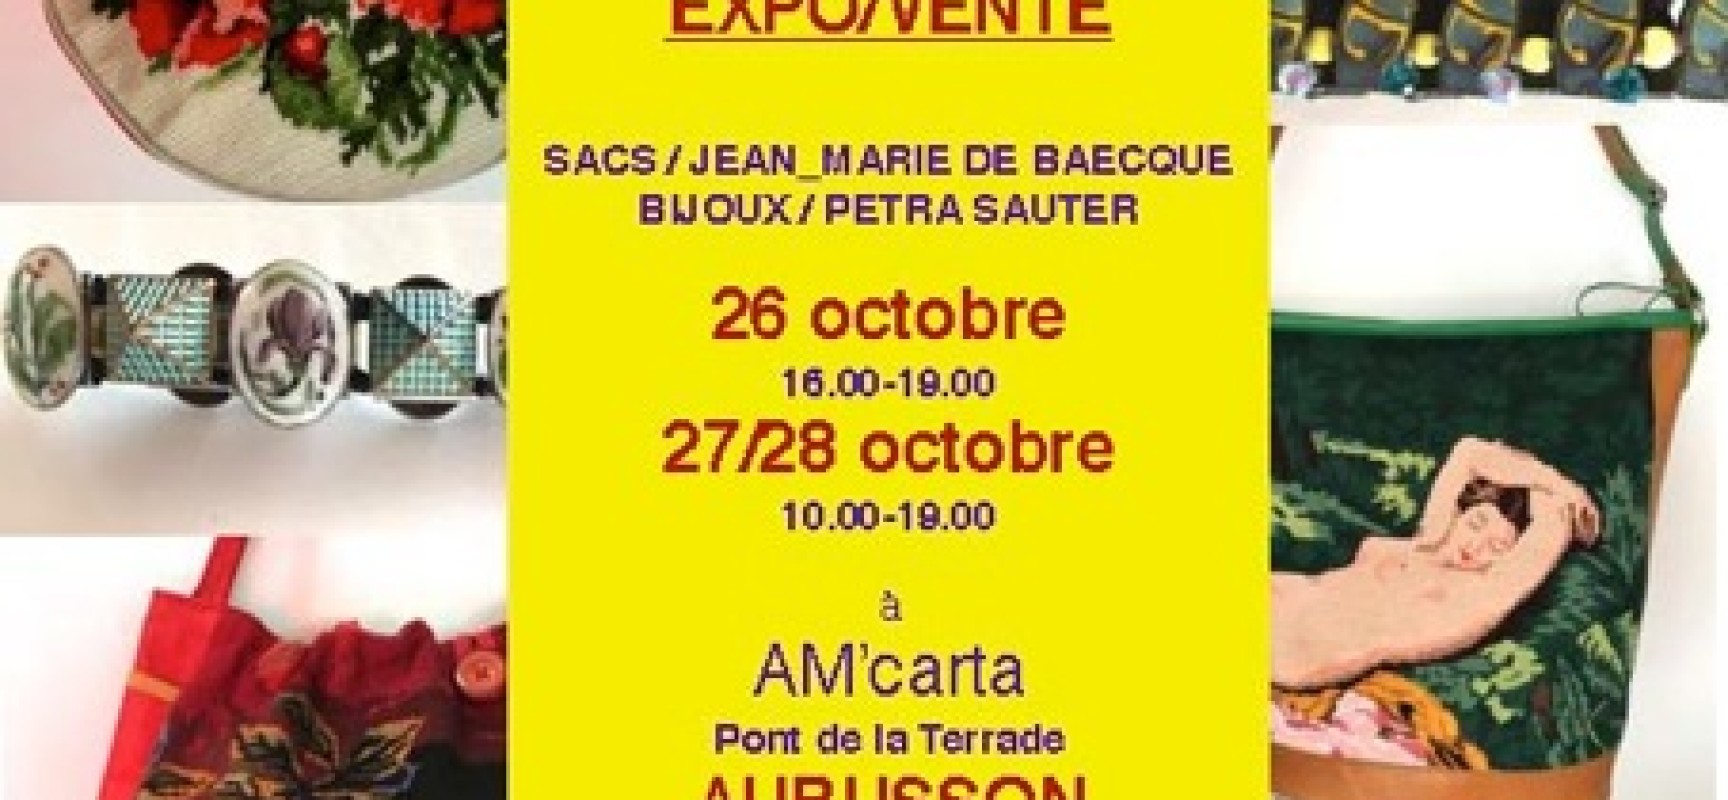 Expo-Vente / Sacs de Jean-Marie de Baecque – Bijoux de Petra Sauter